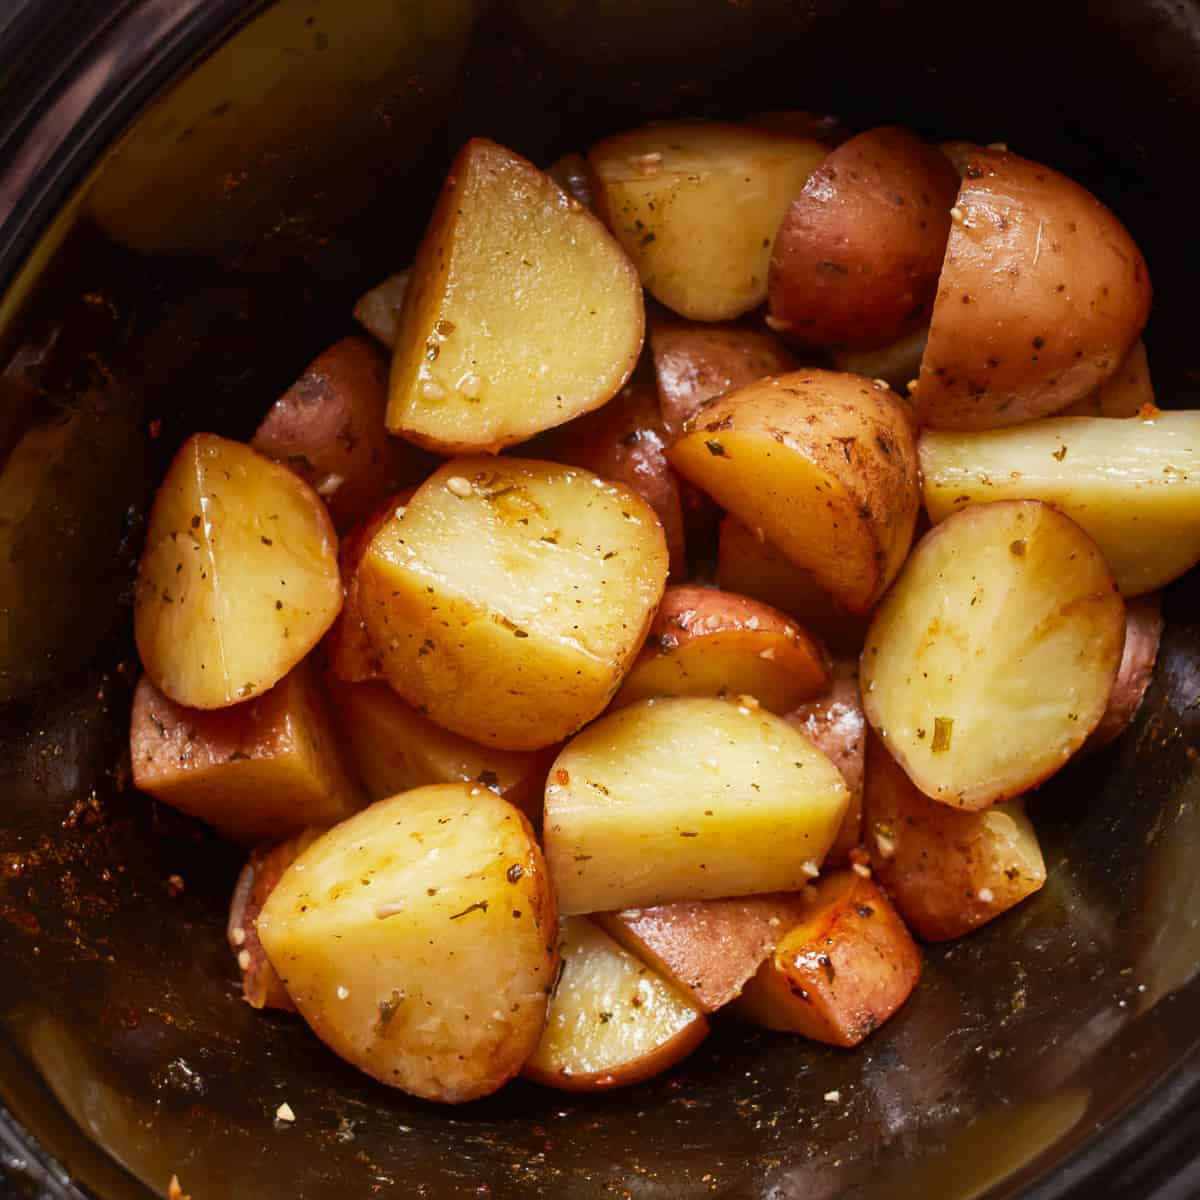 https://www.thecookierookie.com/wp-content/uploads/2018/03/featured-crockpot-potatoes-recipe.jpg